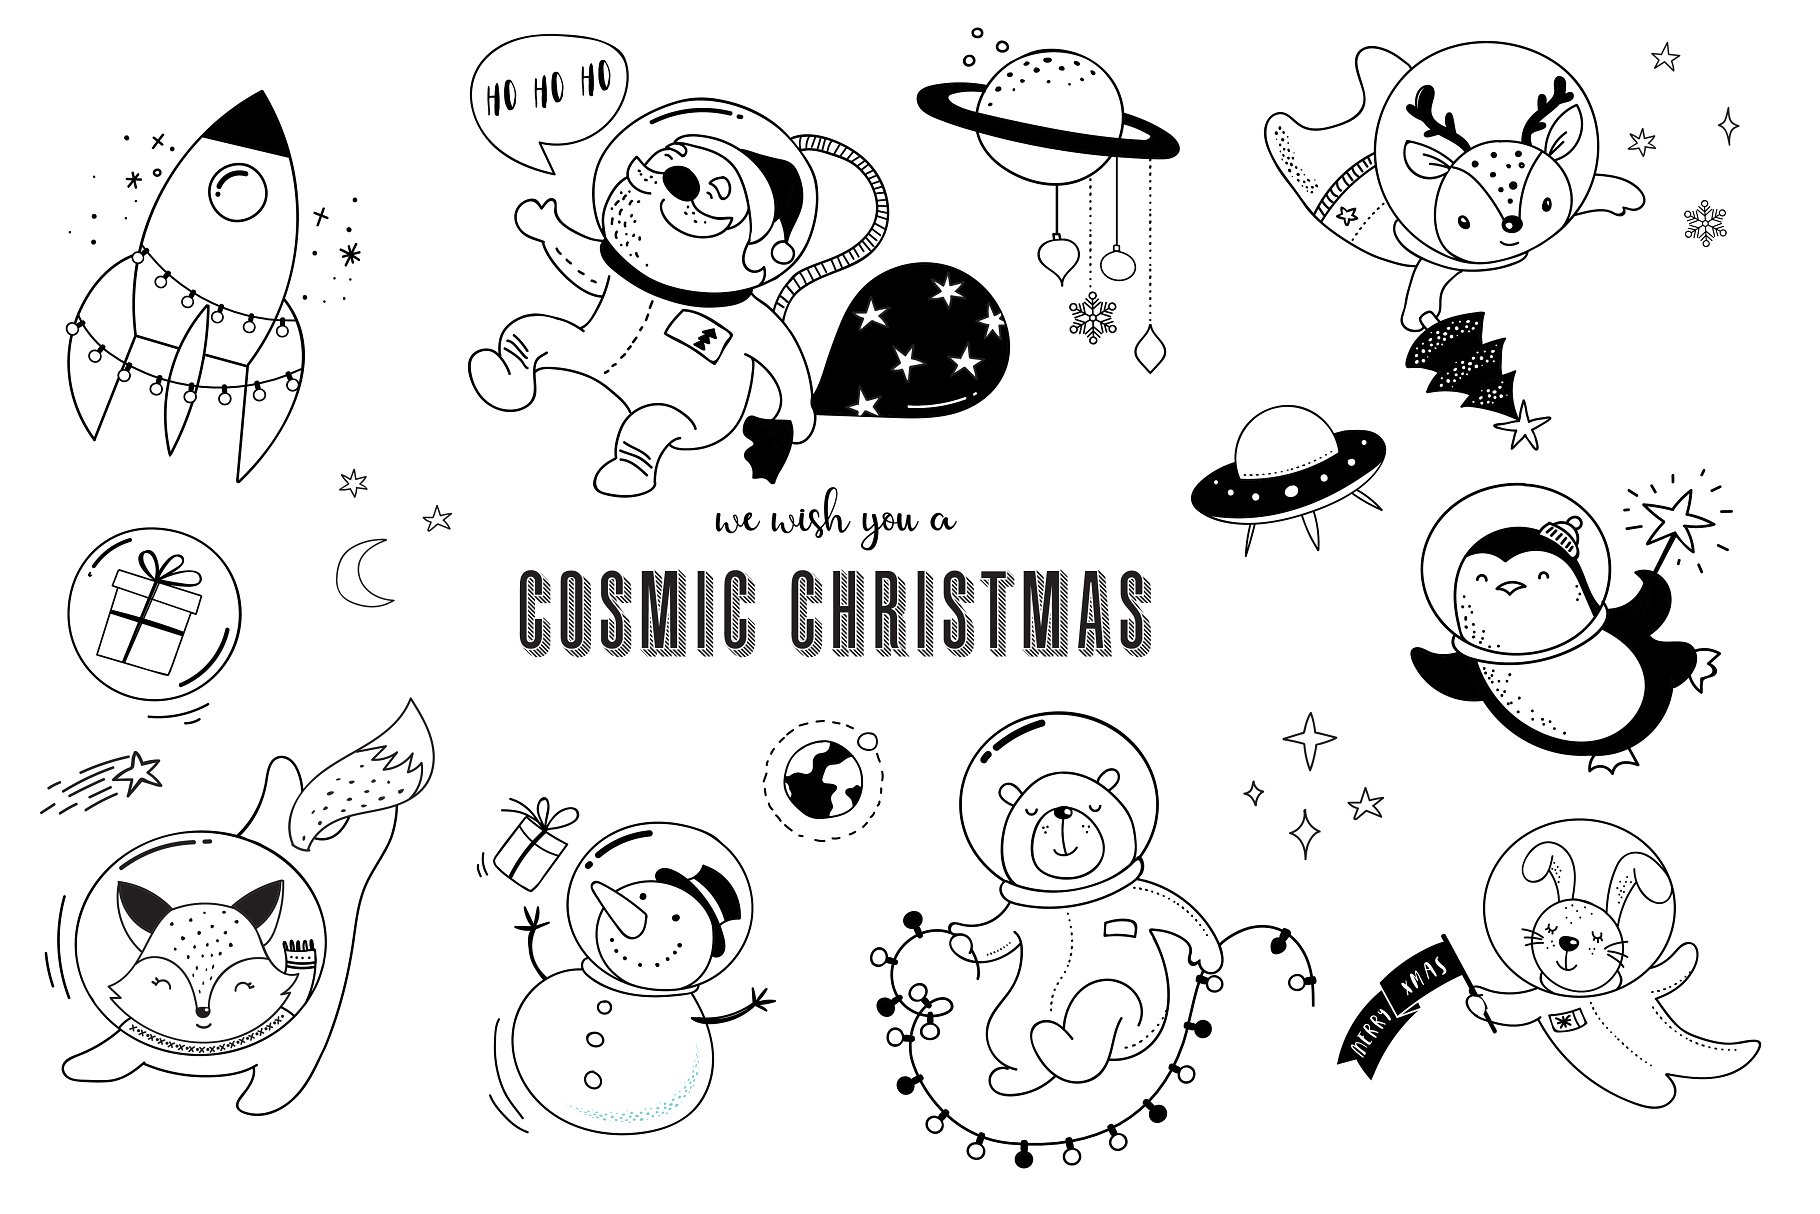 外太空宇宙圣诞节手绘插画素材 Cosmic Christmas in outer space插图2